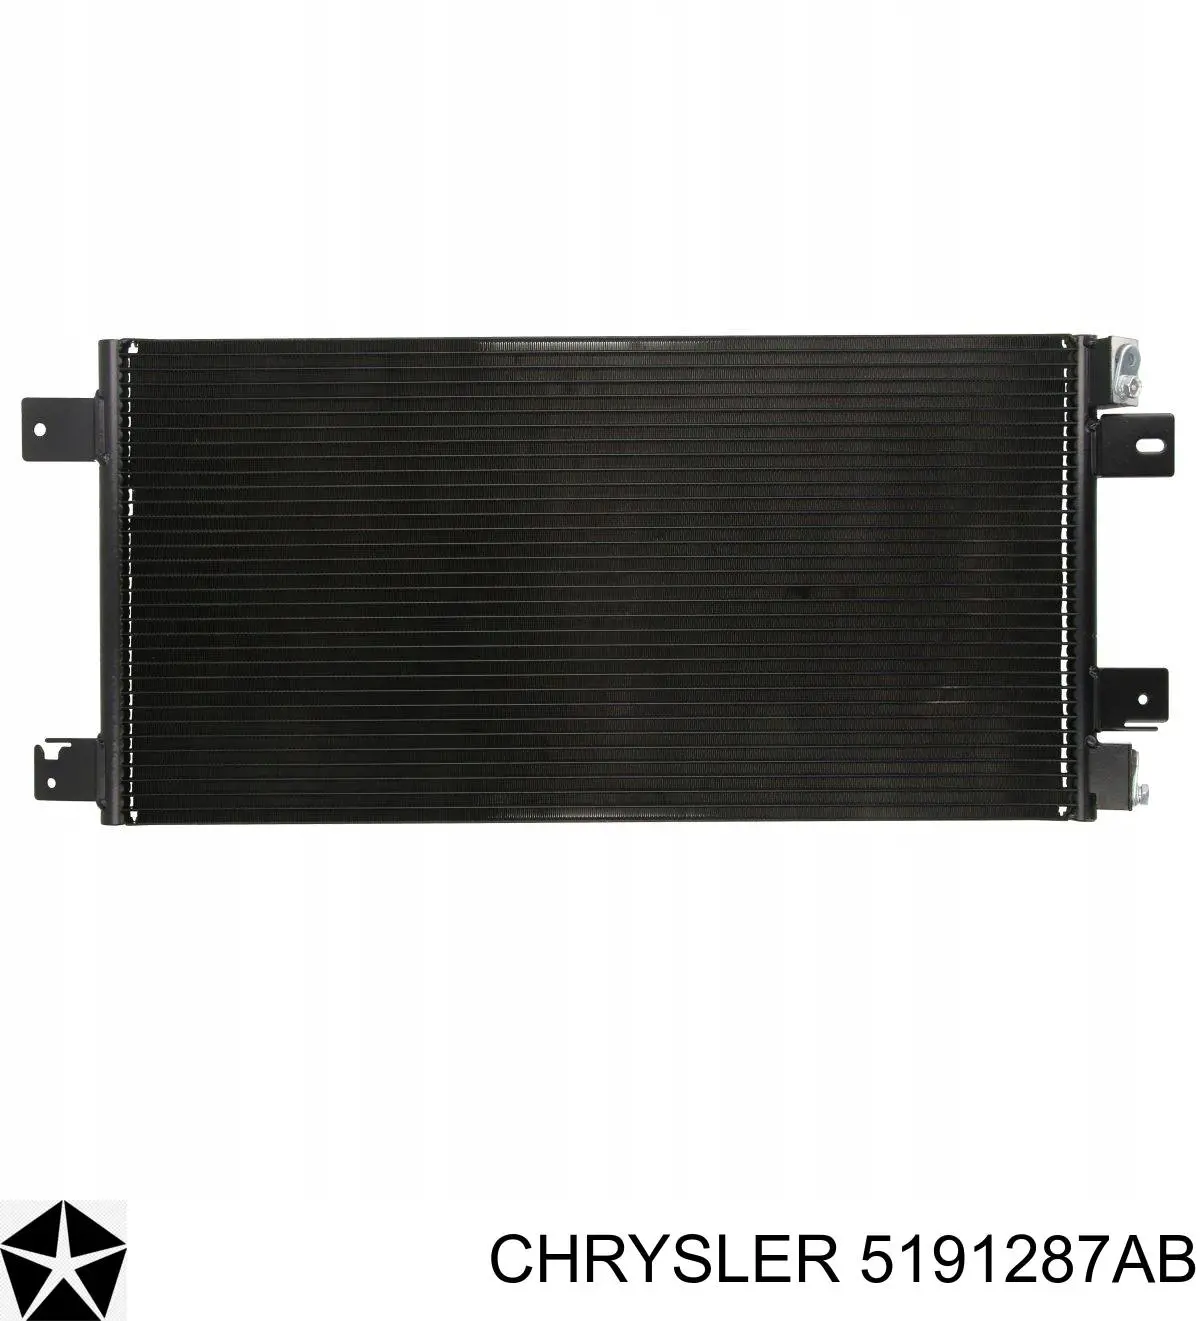 5191287AB Chrysler condensador aire acondicionado